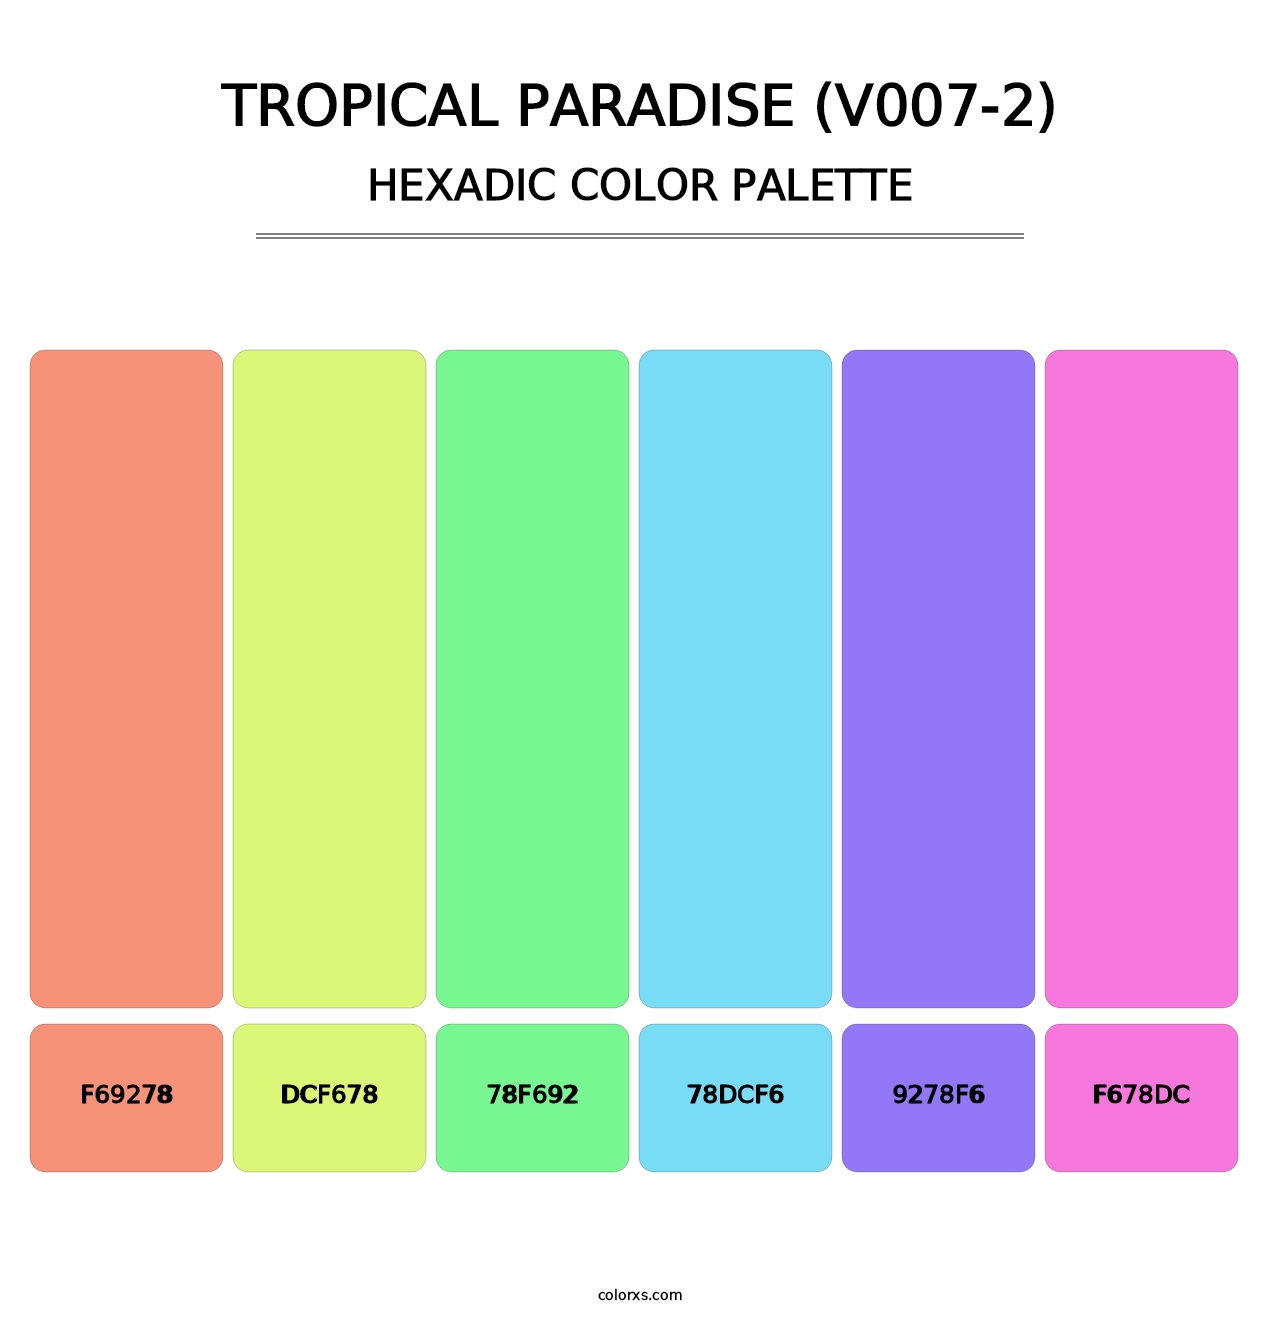 Tropical Paradise (V007-2) - Hexadic Color Palette